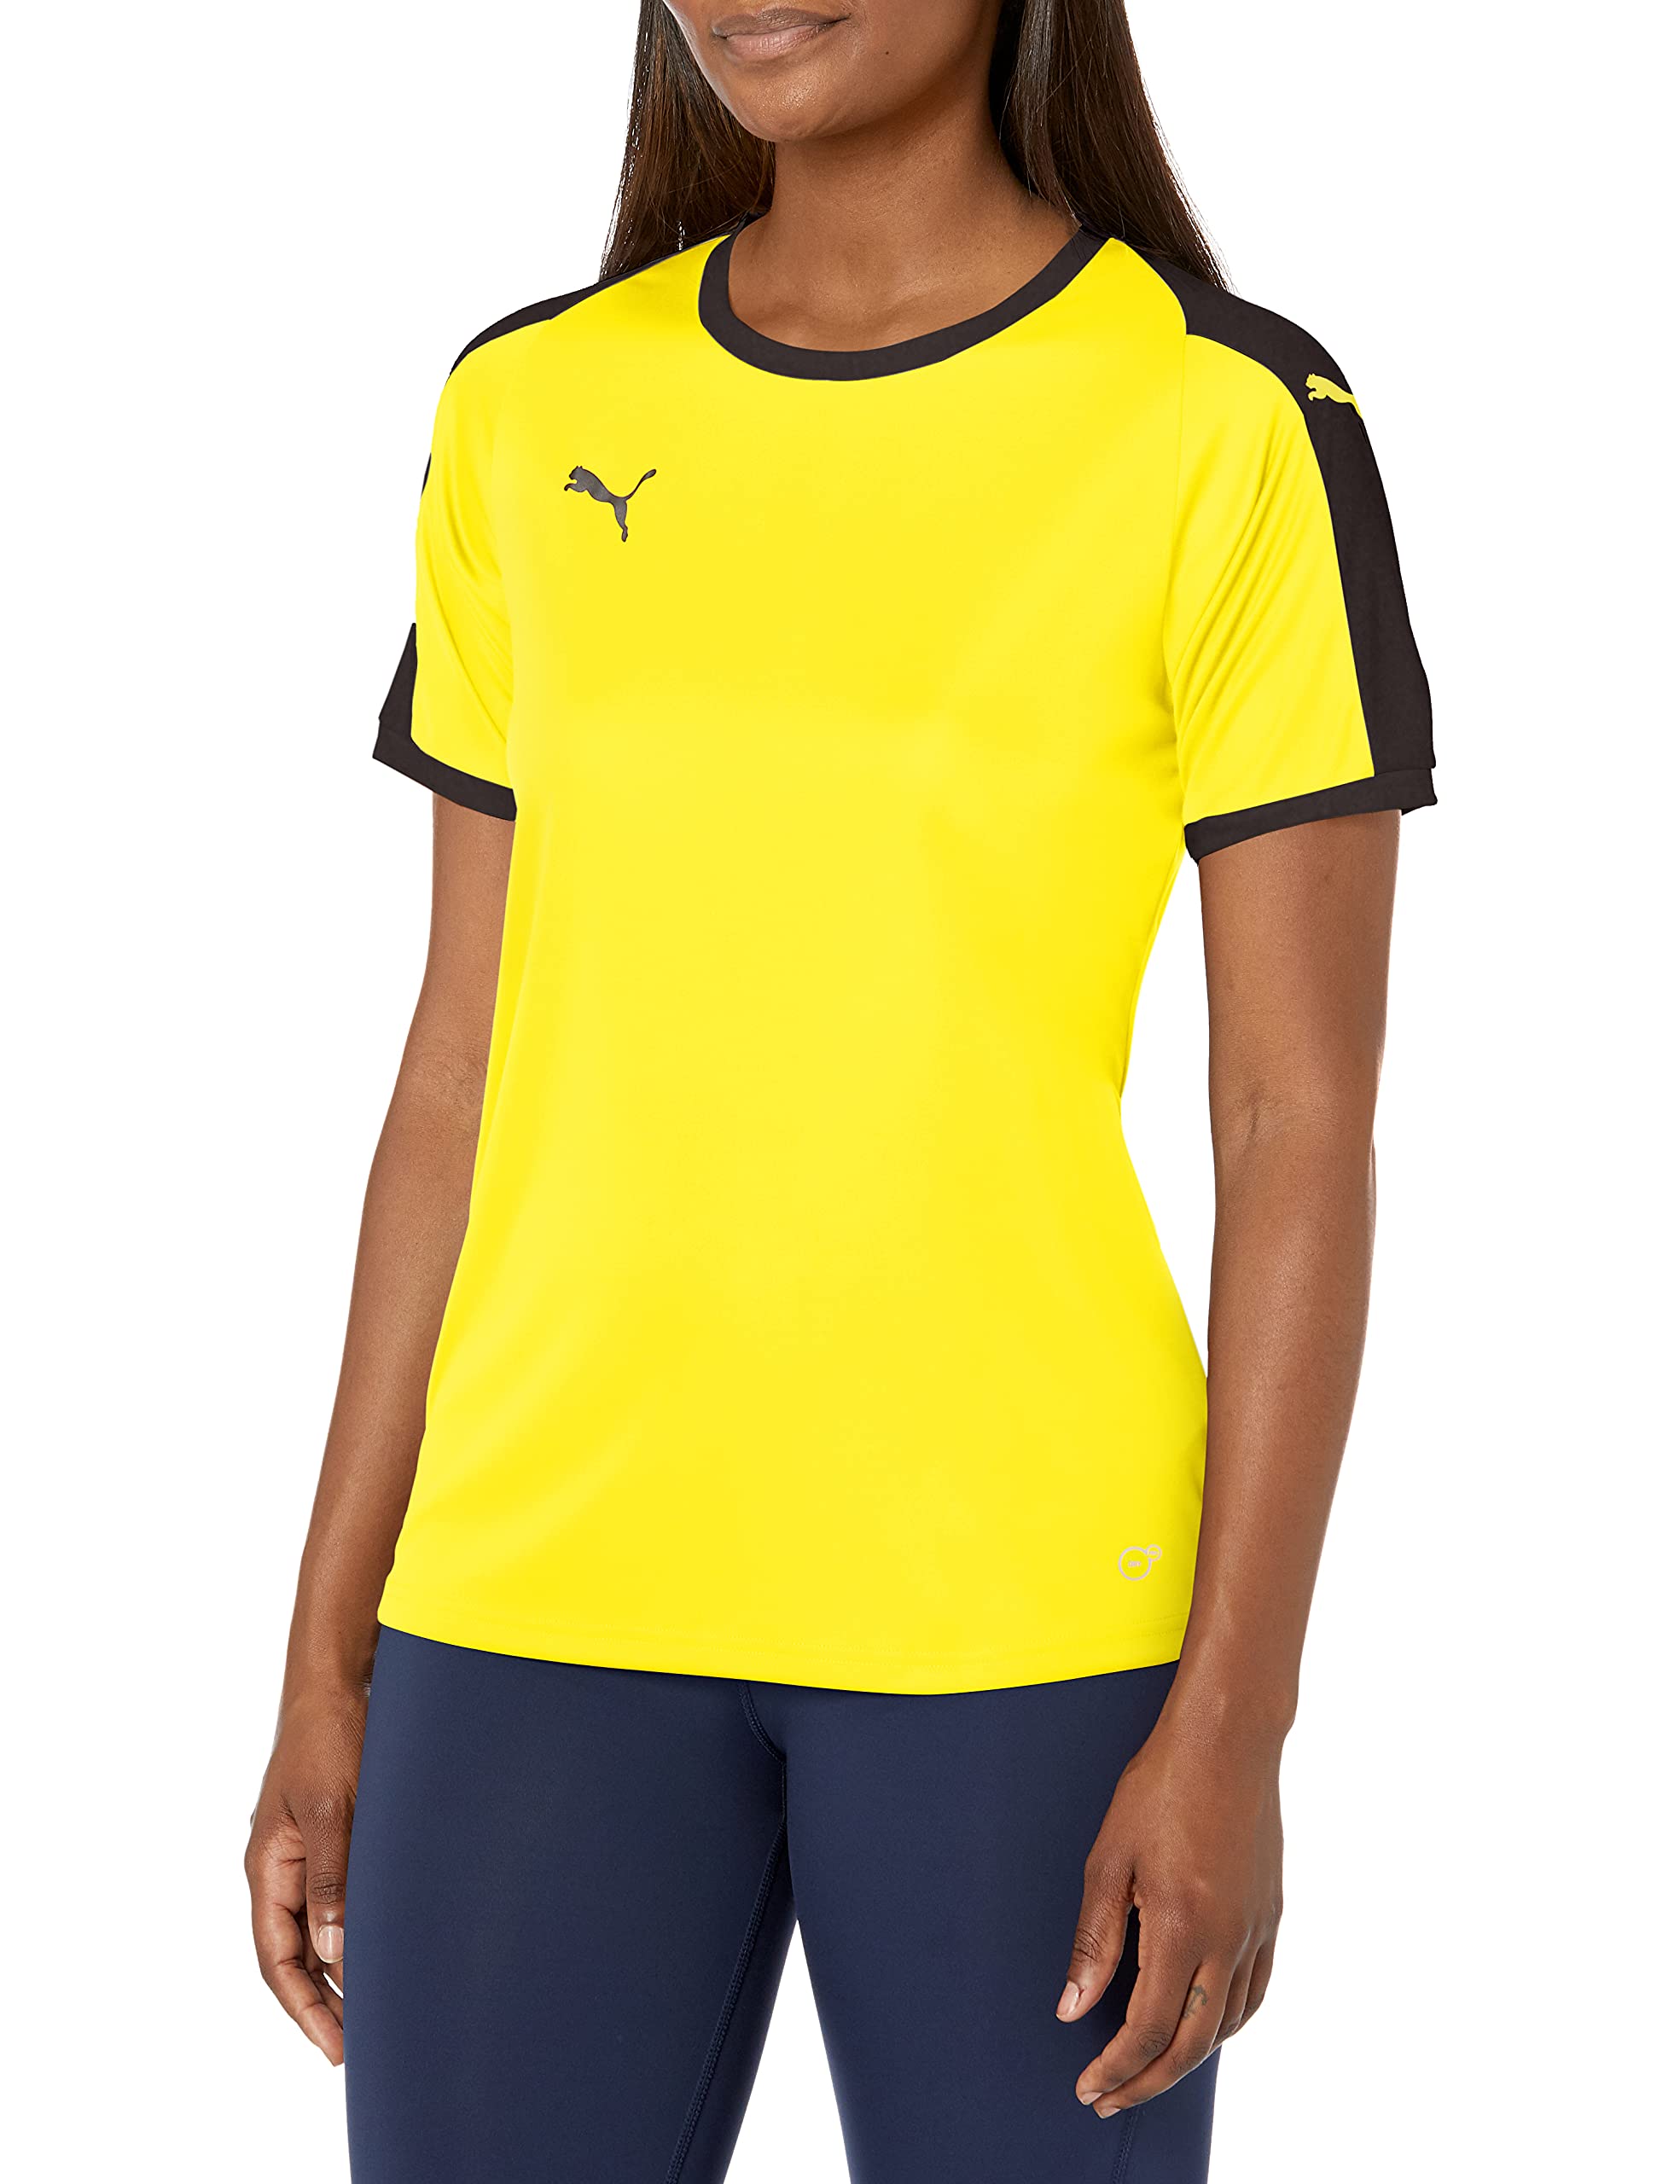 PUMA Womens Liga Jersey - Cyber Yellow/Black - Medium